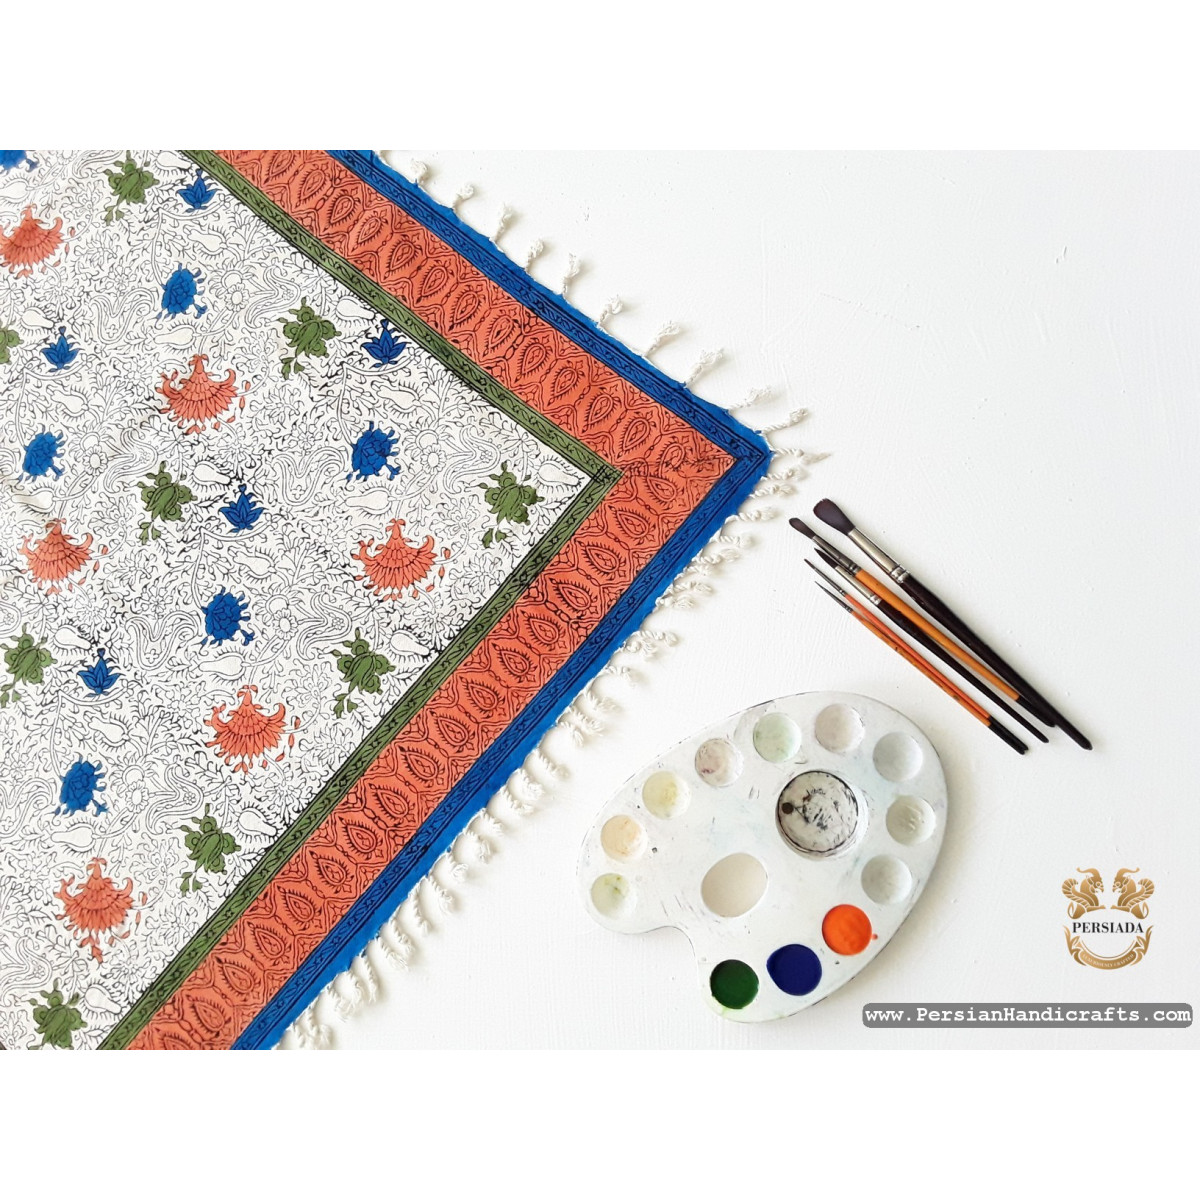 Square Tablecloth | Handmade Organic Cotton | PHGH610